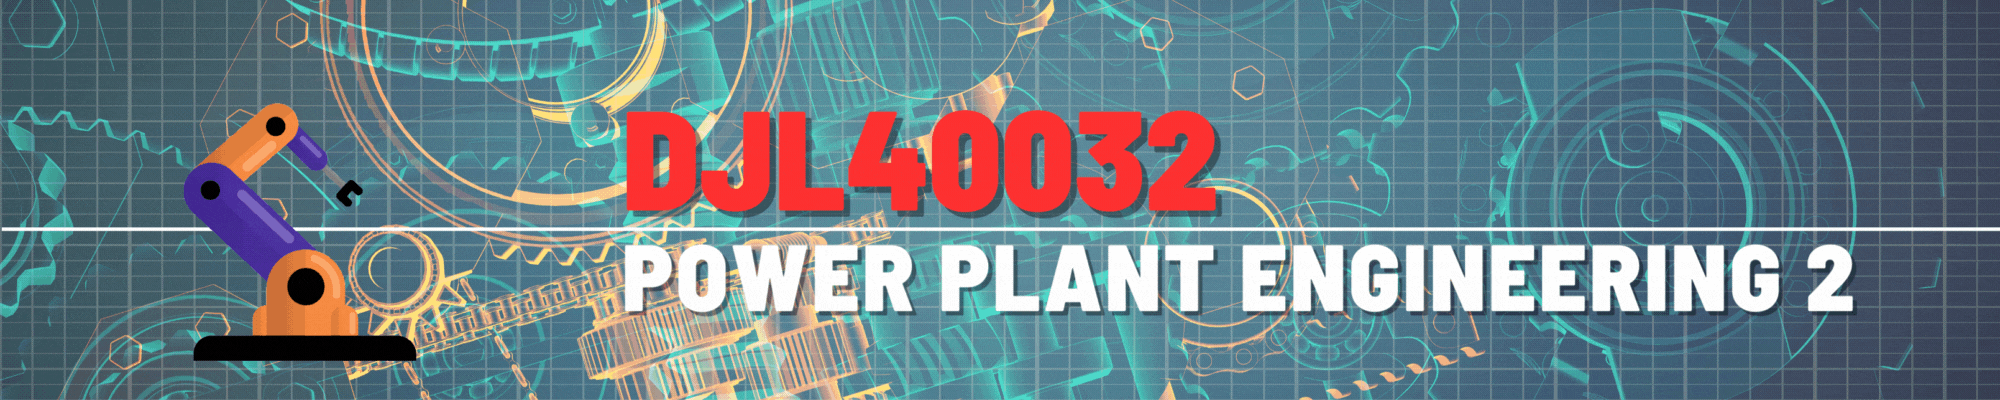 DJL40032 POWER PLANT ENGINEERING 2